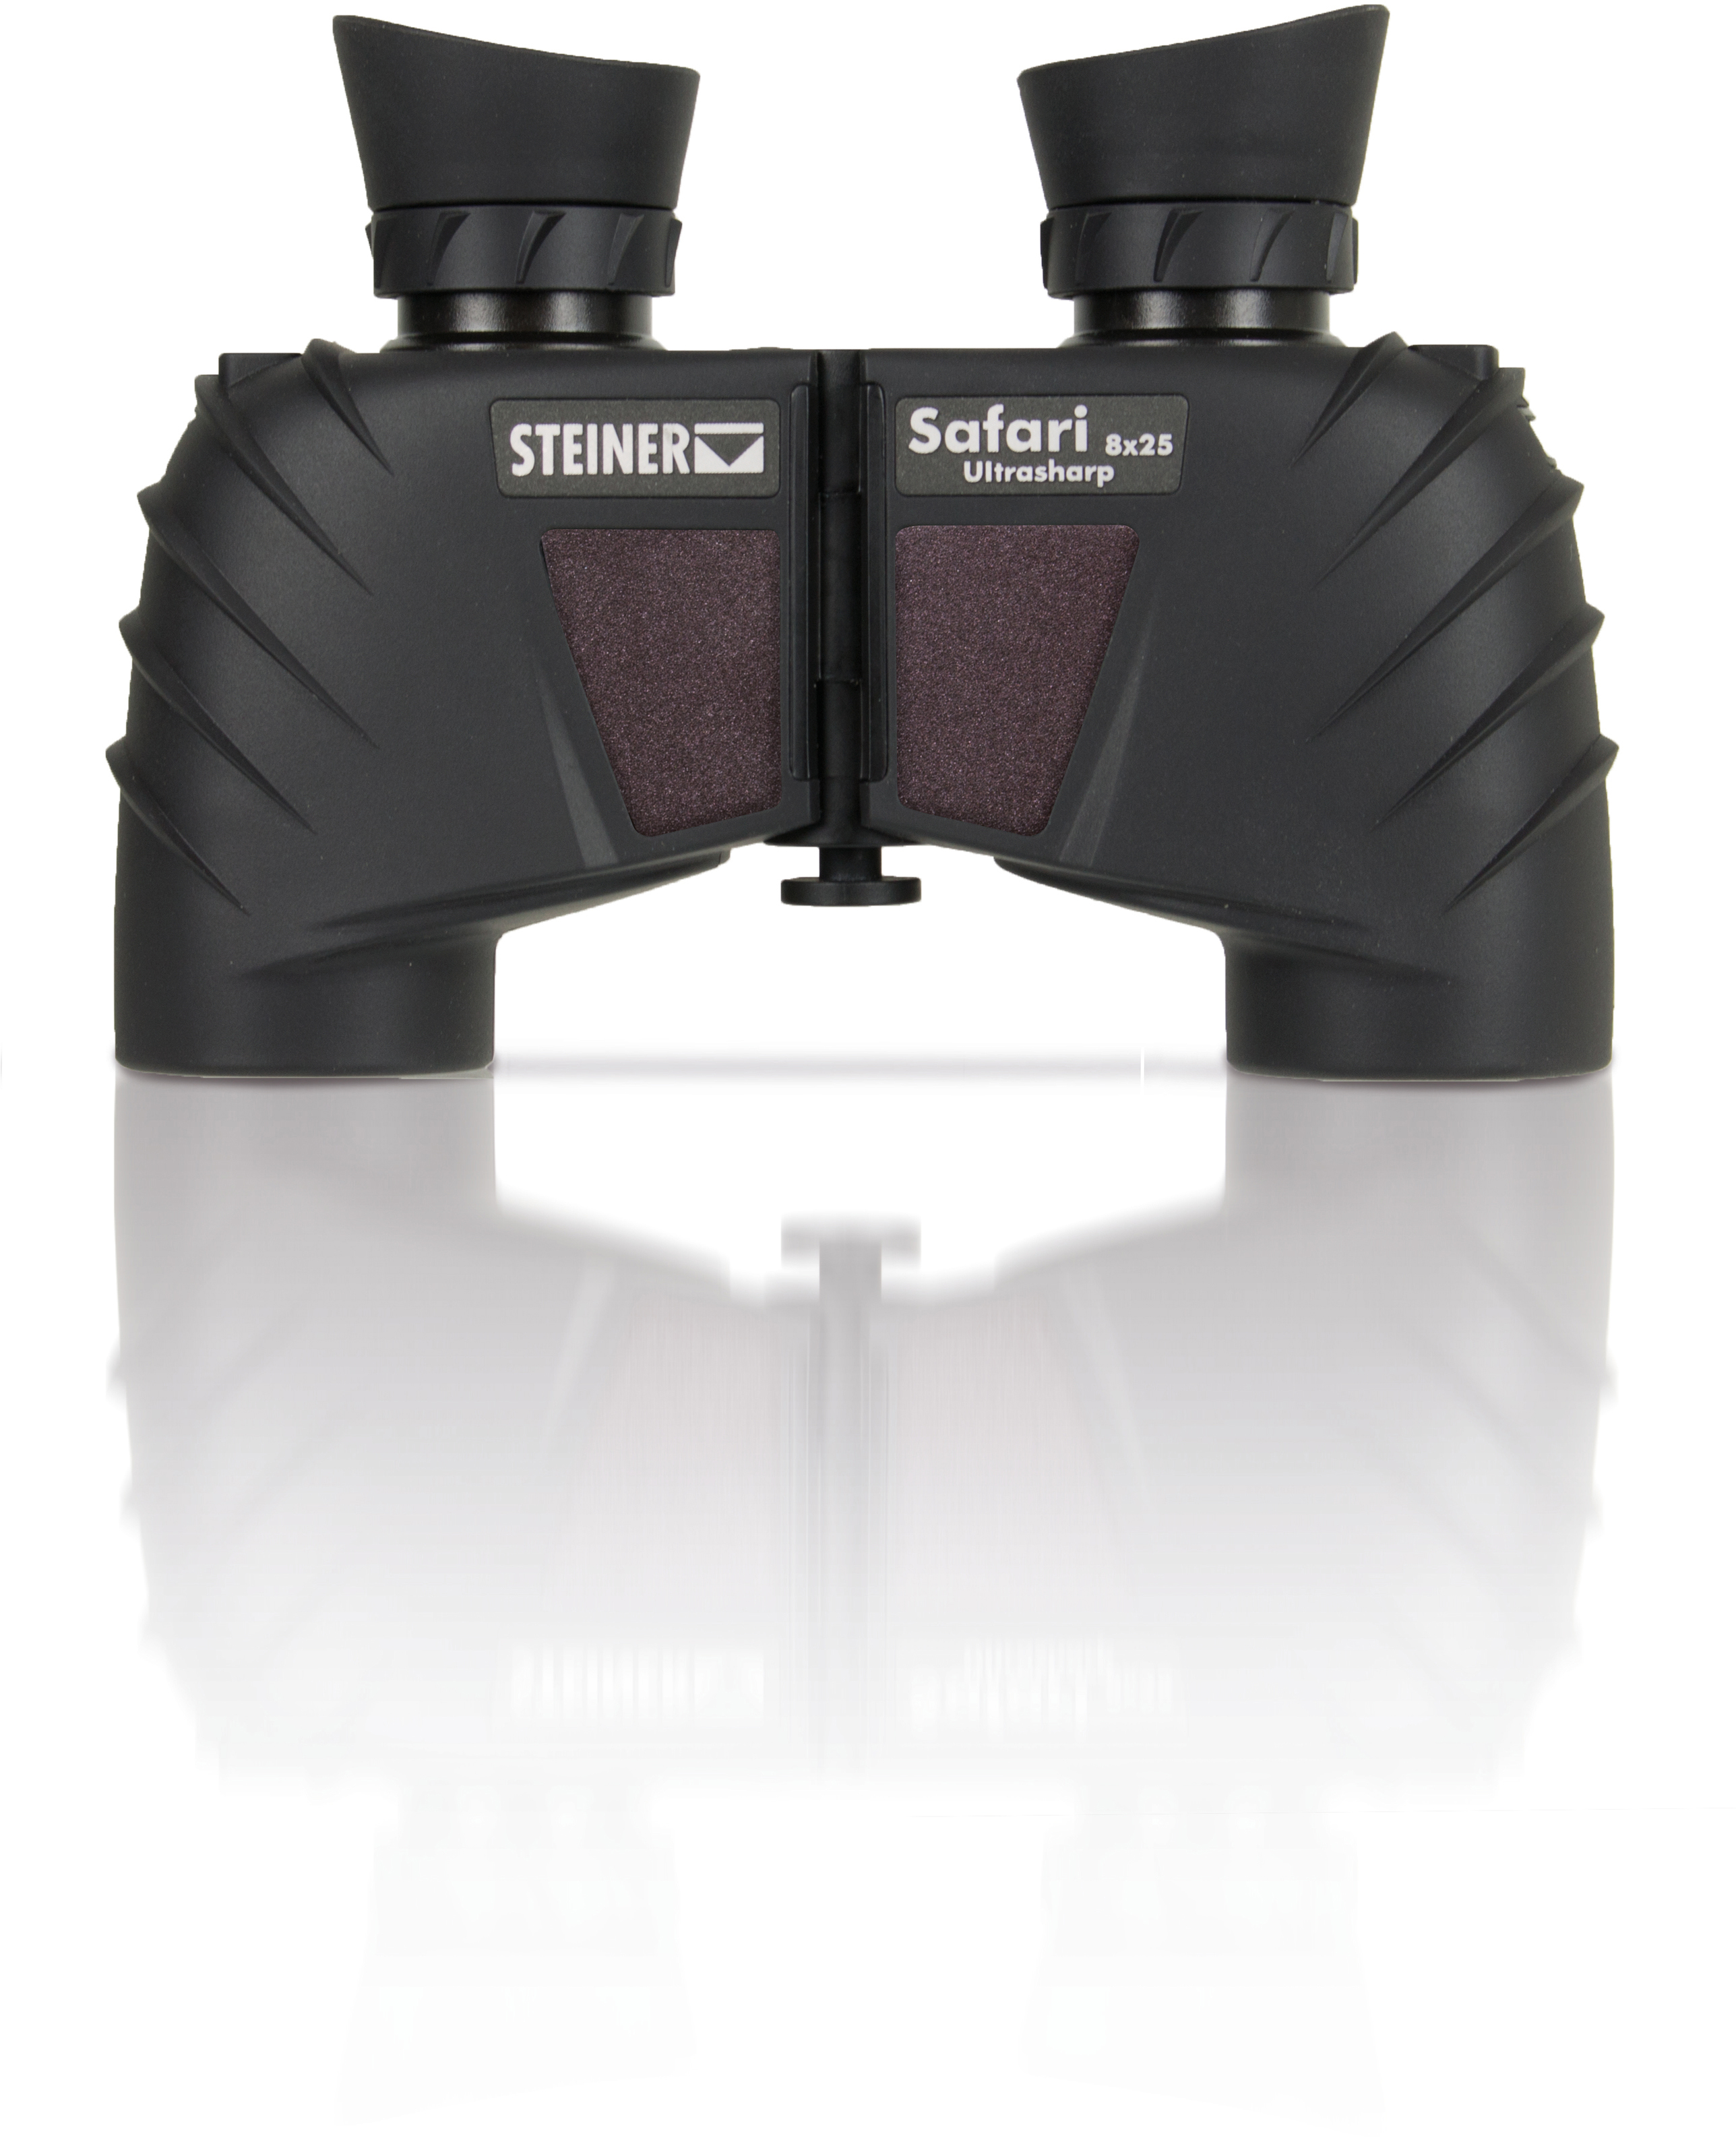 STEINER Safari 8x, UltraSharp Fernglas 25 mm